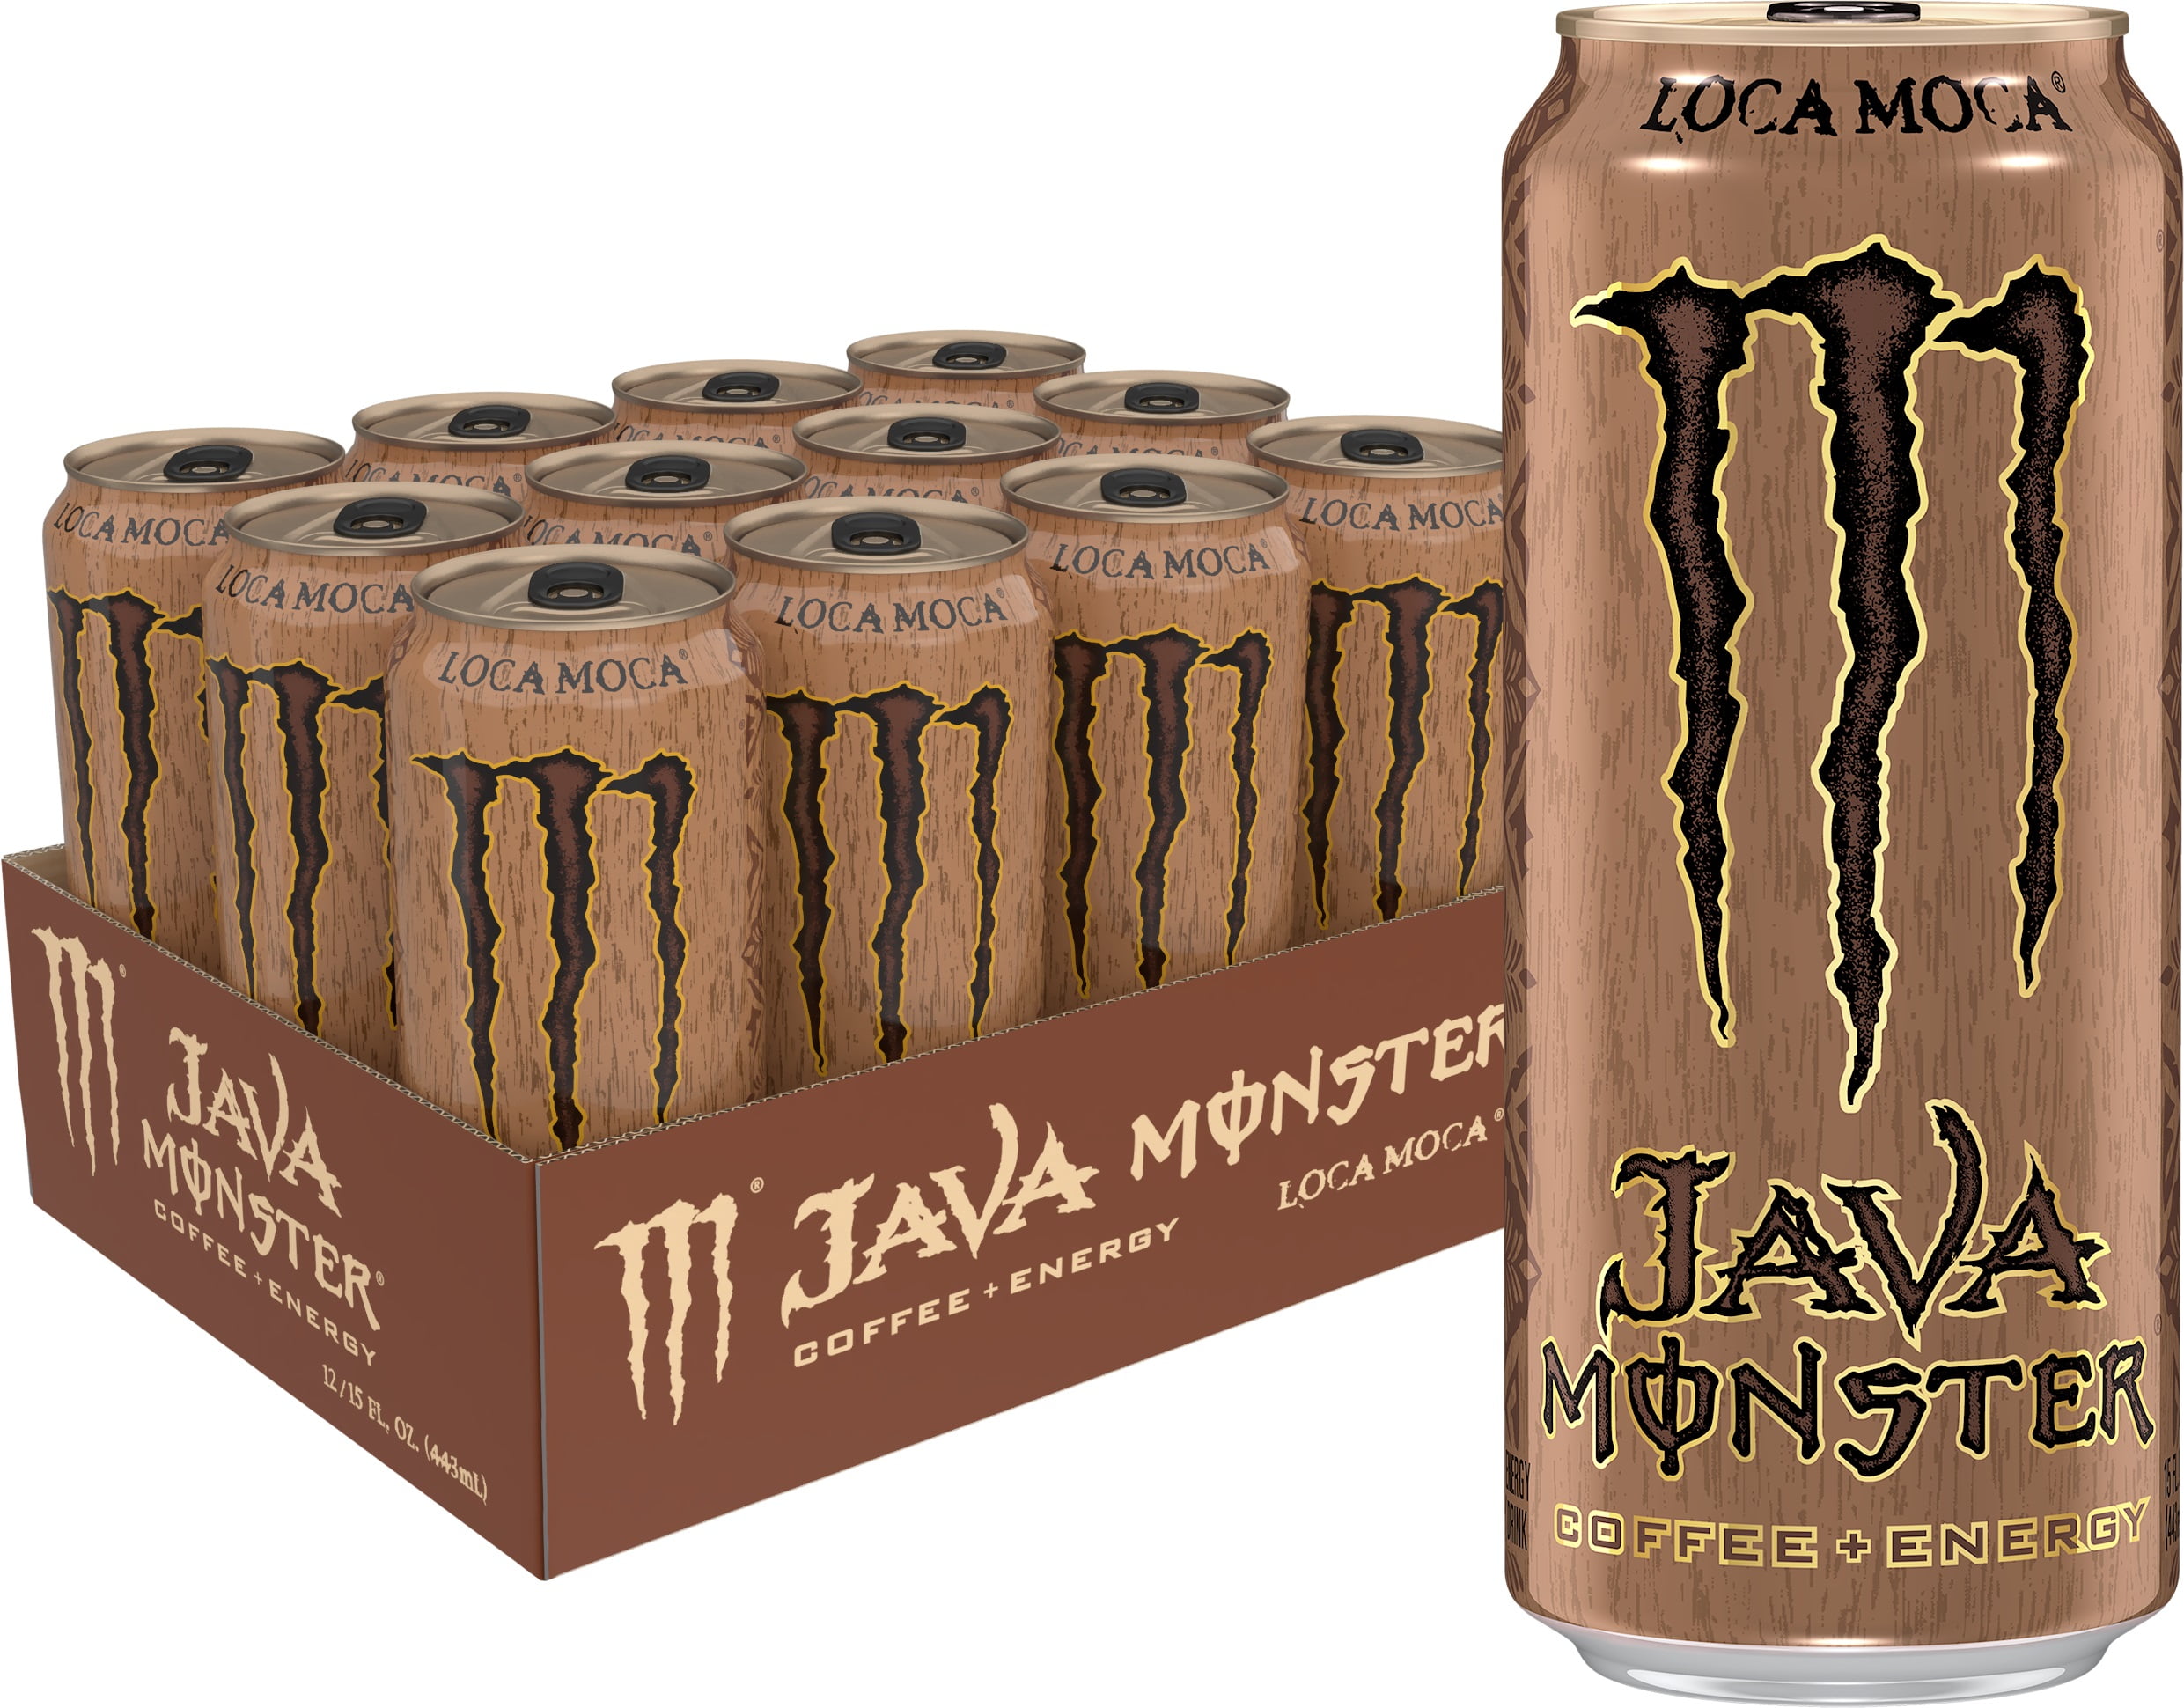 Java Monster Loco Moca, 15 Fl Oz Cans, 12 Ct